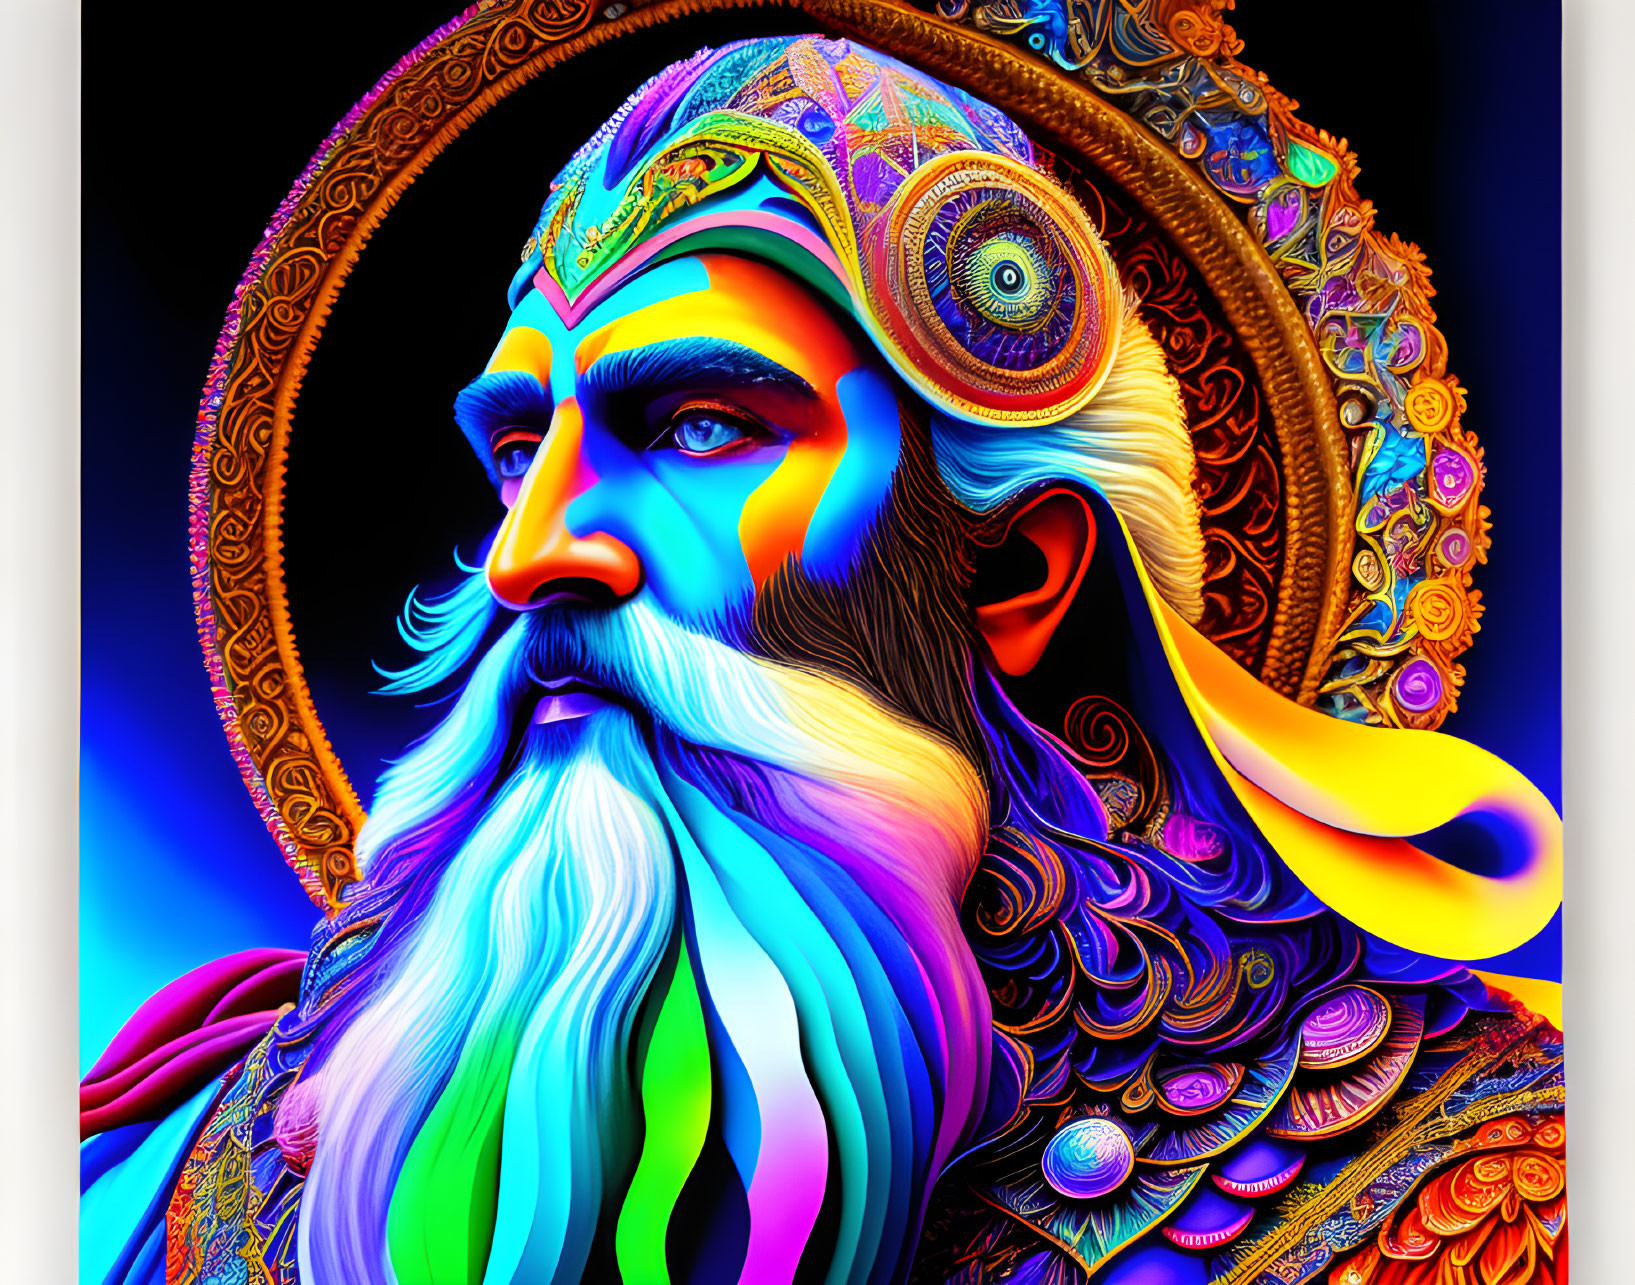 Vibrant psychedelic digital art of bearded male figure in blue, orange, and purple.